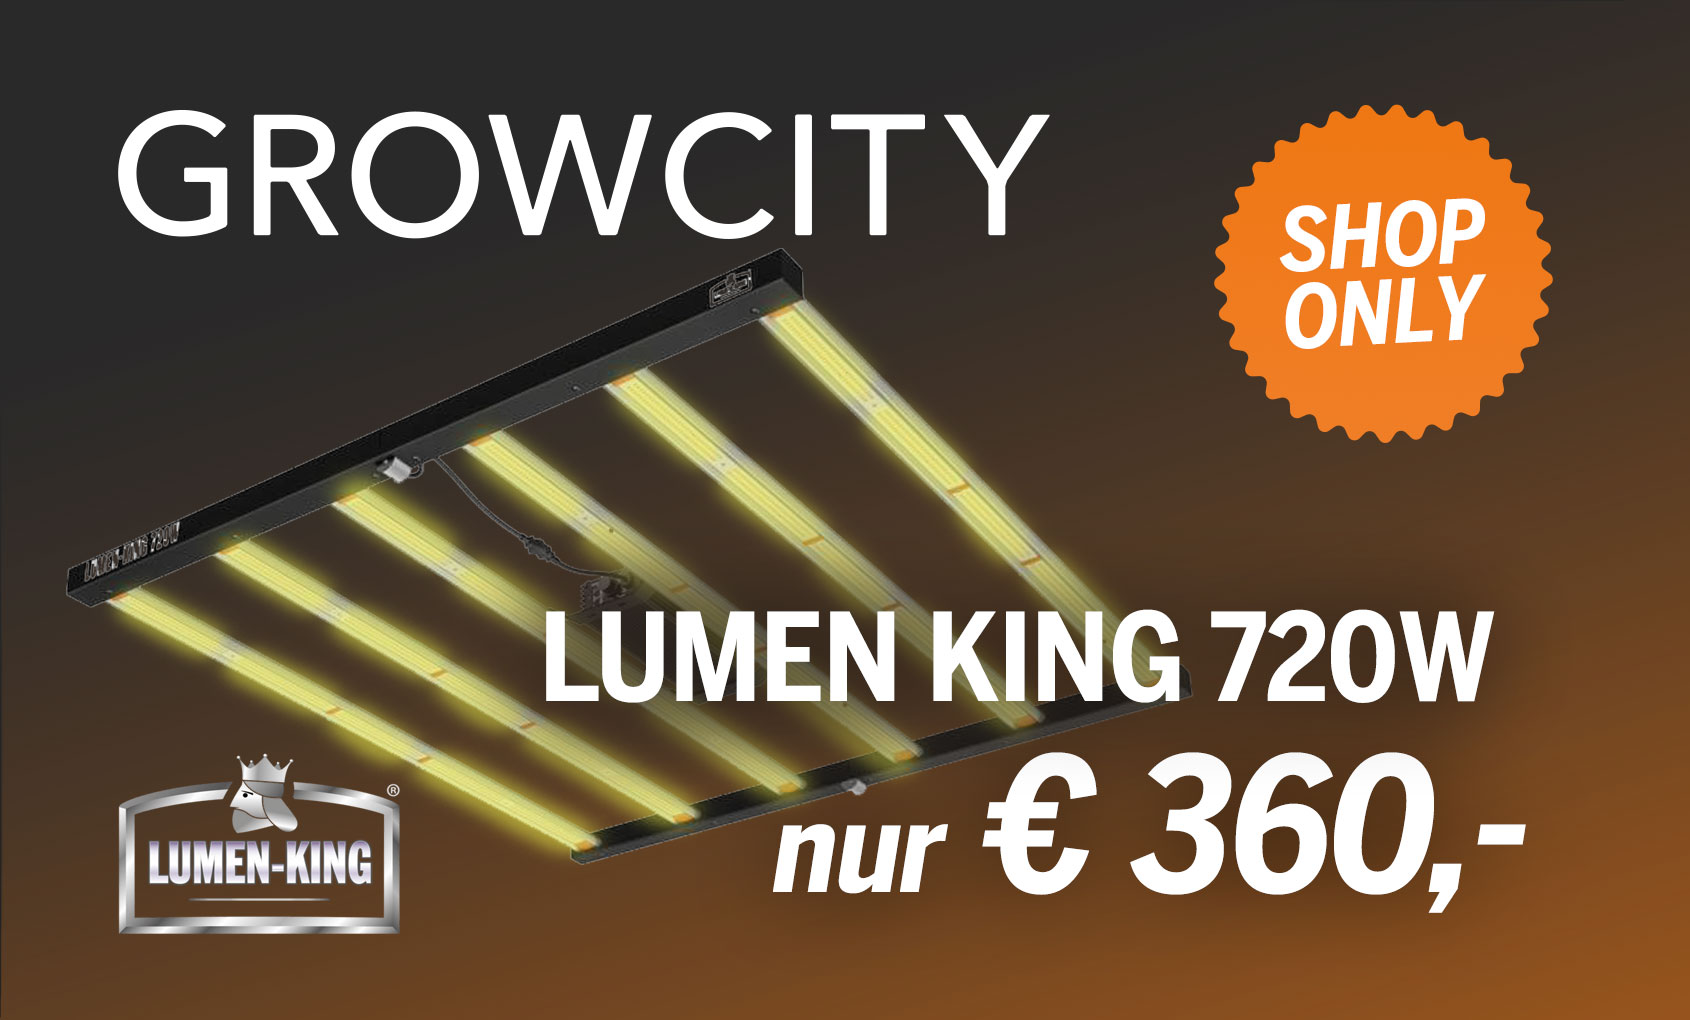 Lumen King 720W Growcity Shop Only